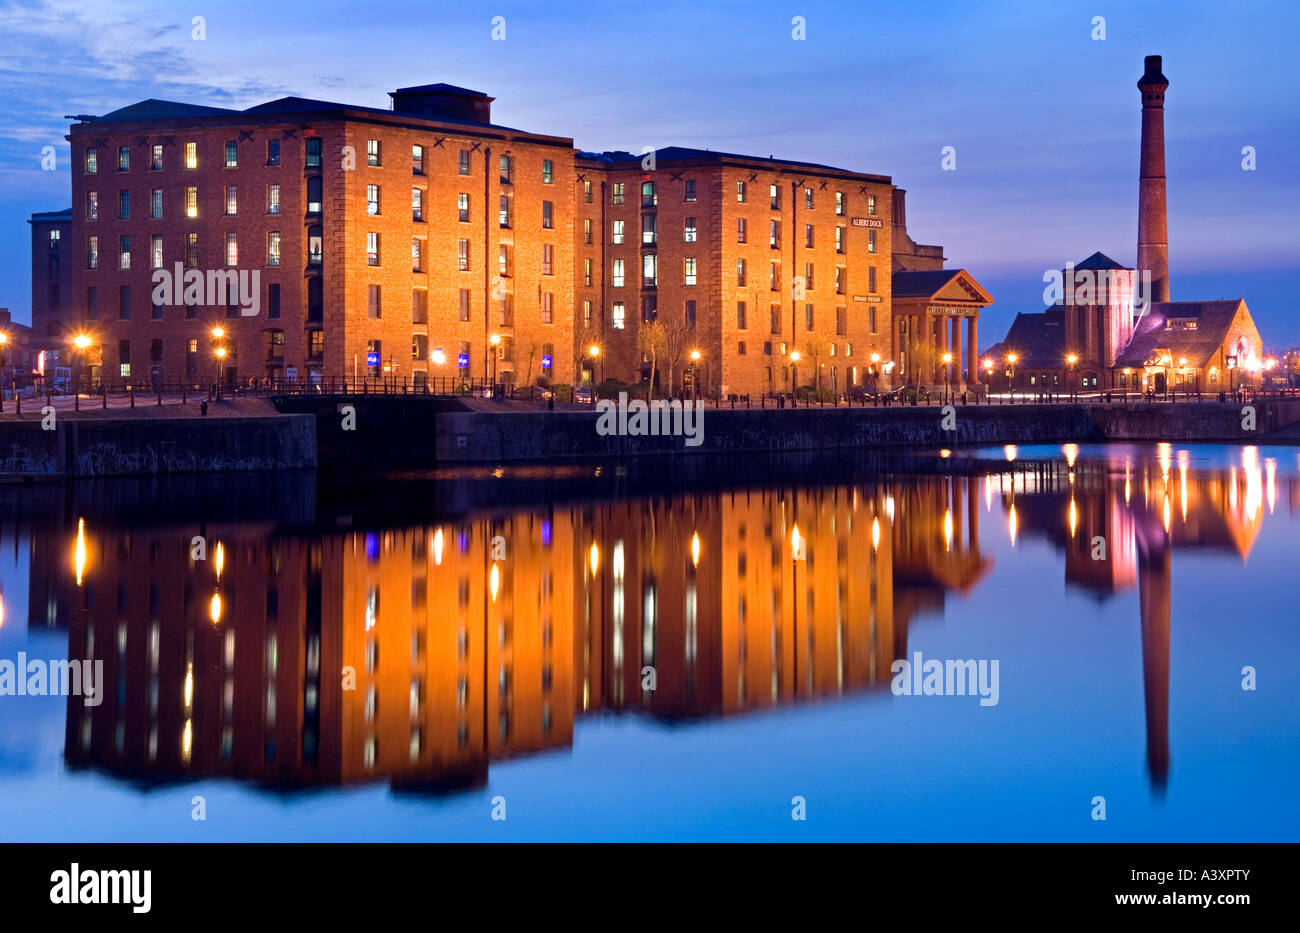 L'Pumphose, Granada TV, Liver Building & Albert Dock bâtiments reflètent dans Salthouse Dock, Liverpool, Merseyside, England, UK Banque D'Images